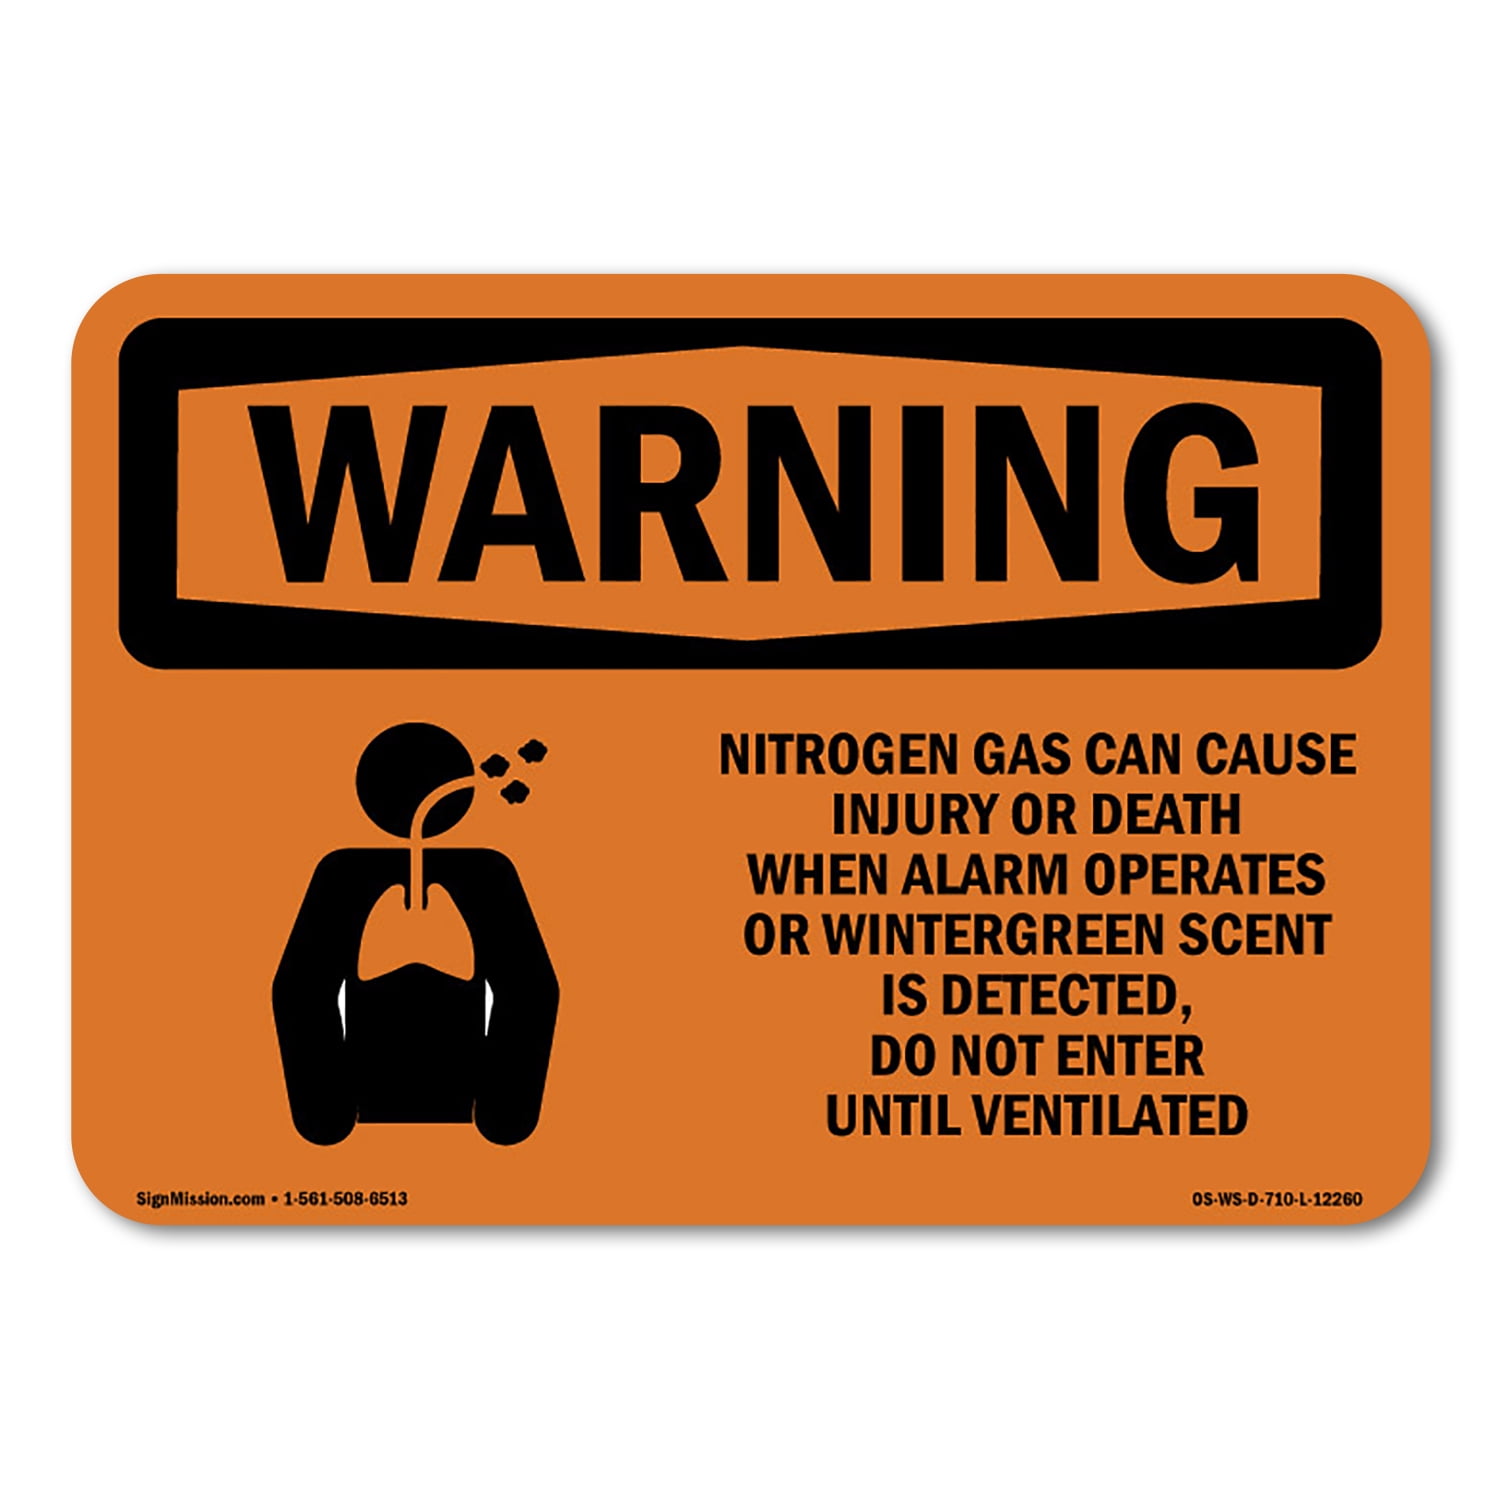 nitrogen symbol